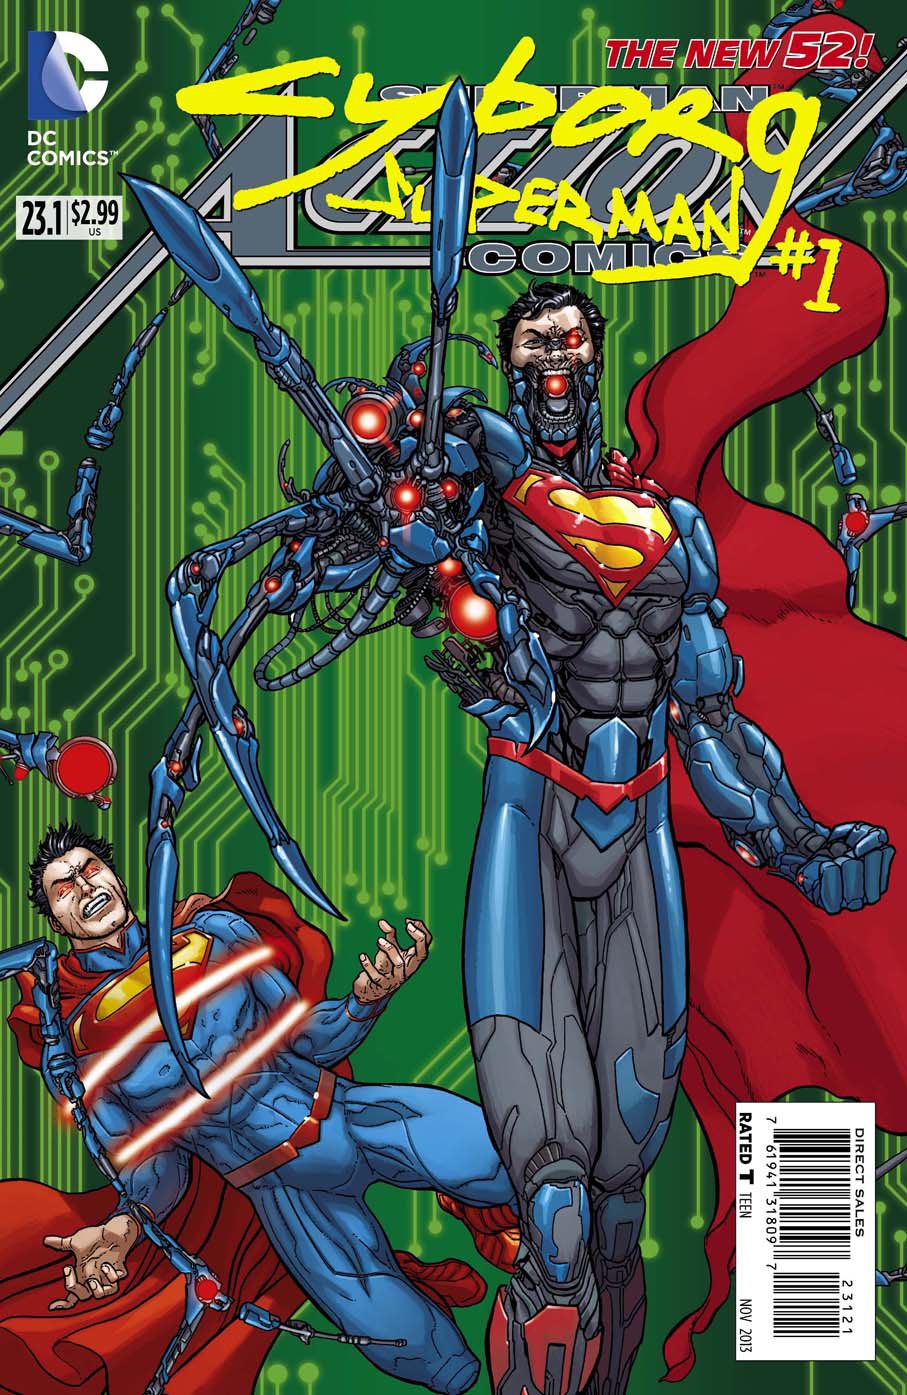 Action Comics (Vol 2) #23.1 [2013] VF/NM Cyborg Superman #1 *3D Lenticular Motion Cover*